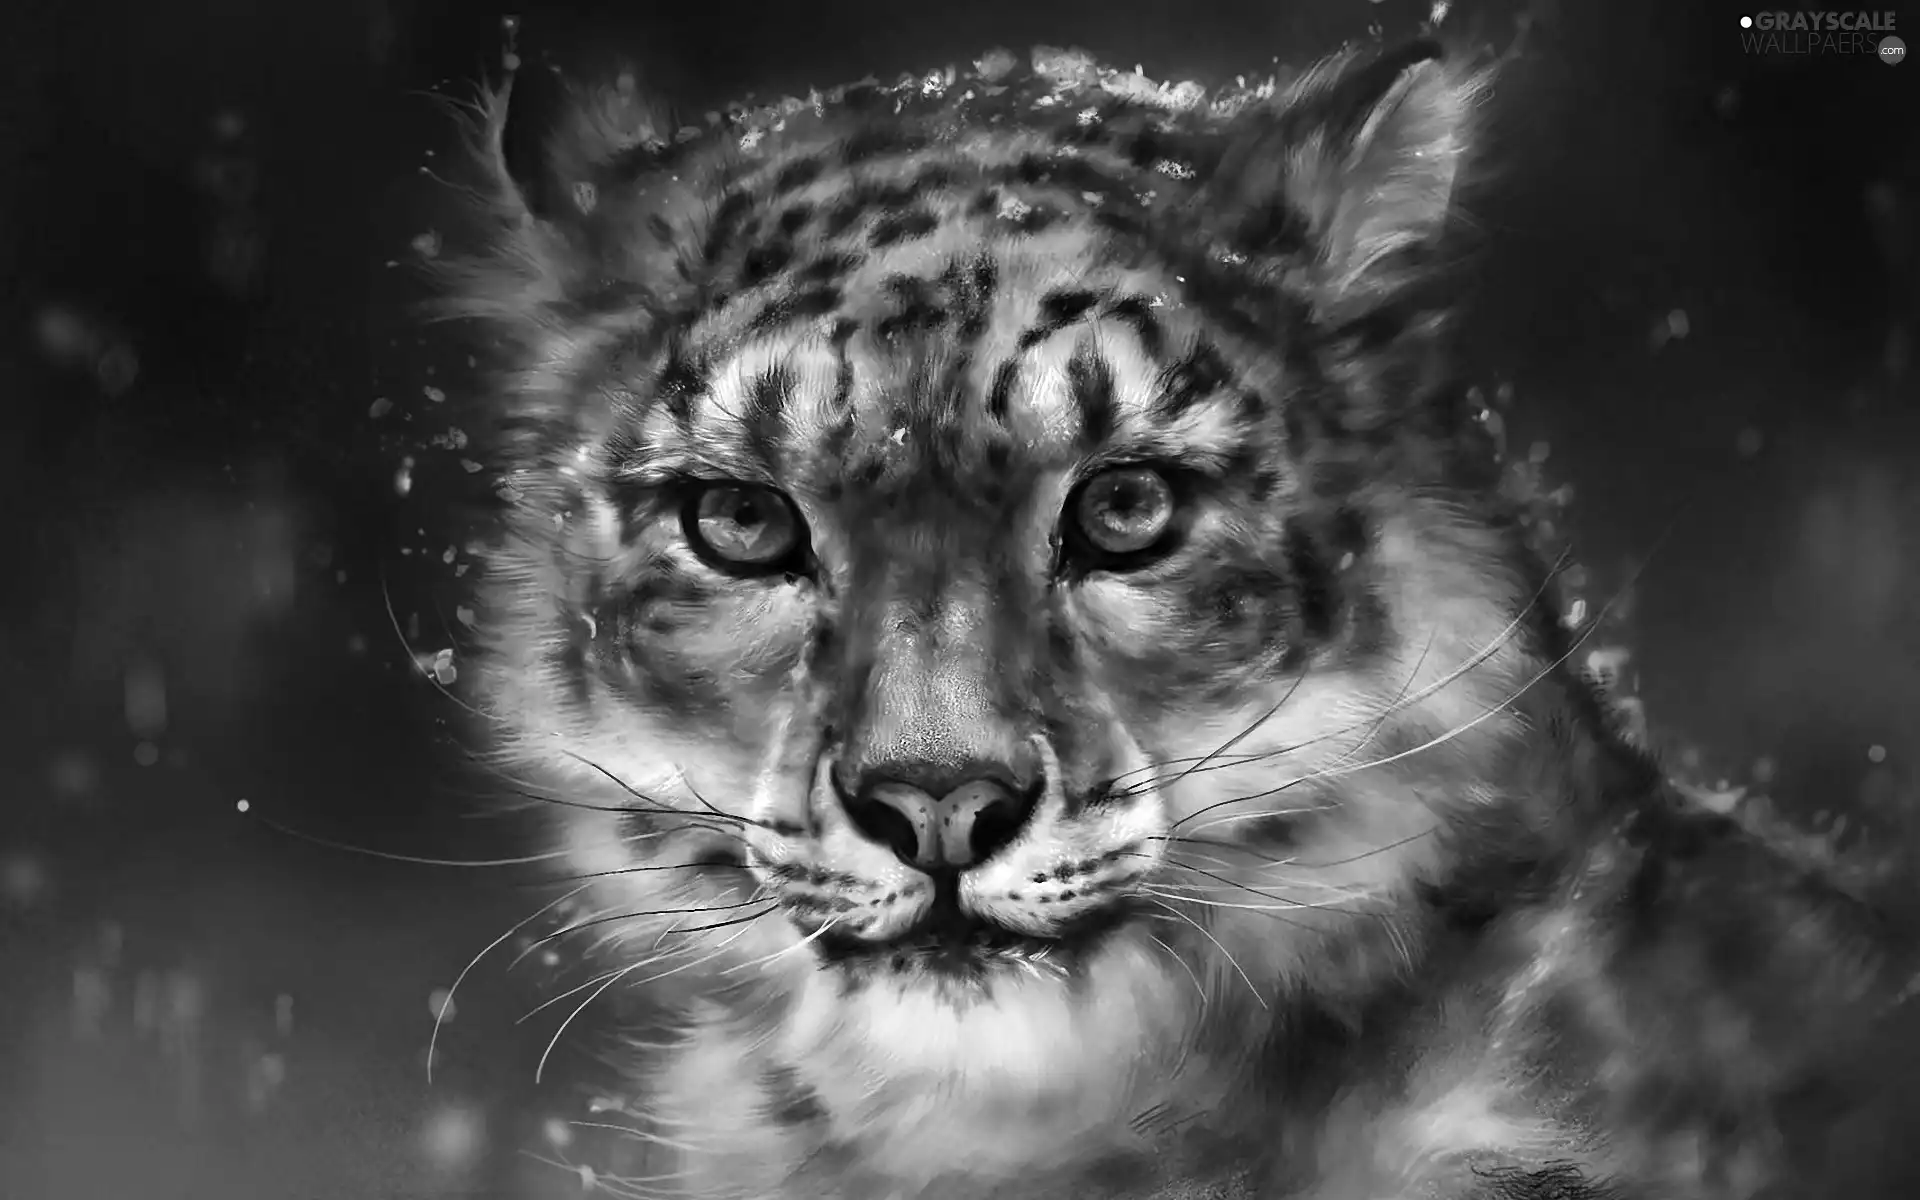 graphics, Panther, snow, snow leopard